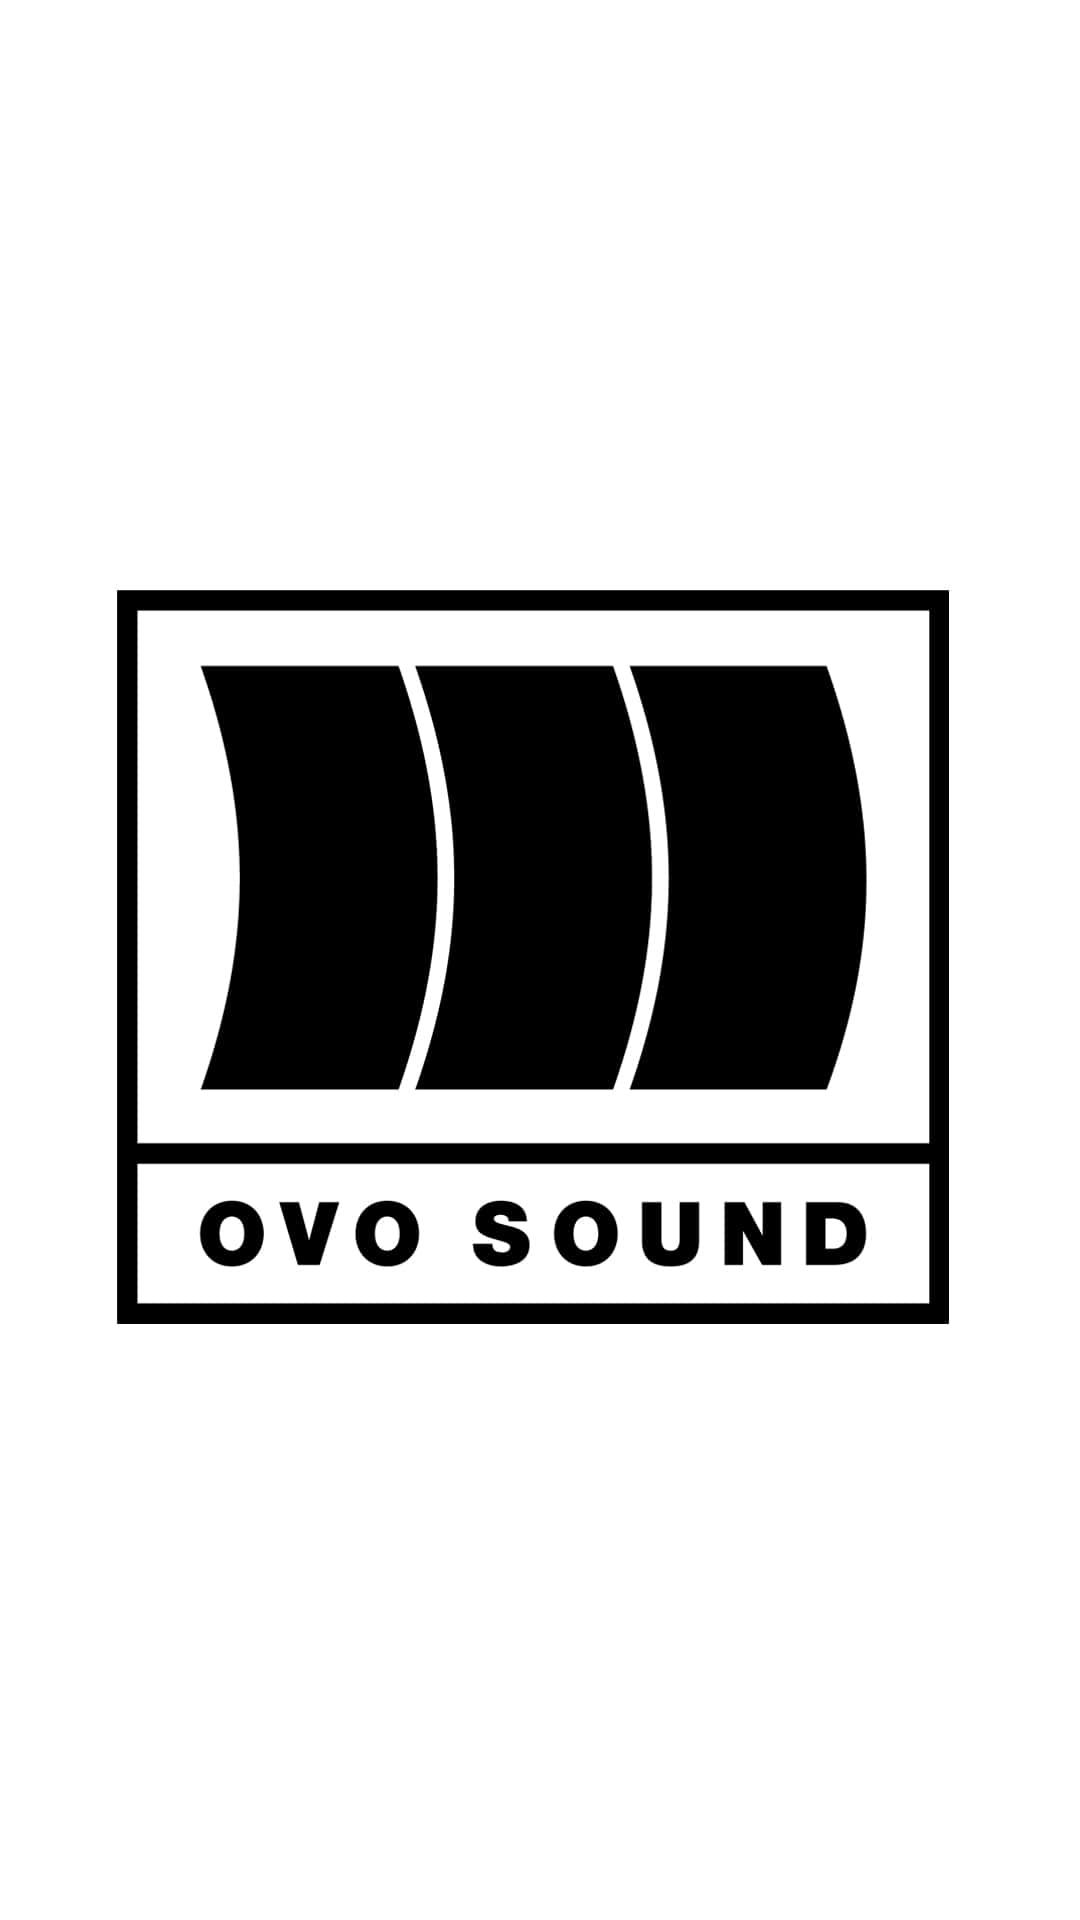 Ovo Sound Logo On A White Background Wallpaper